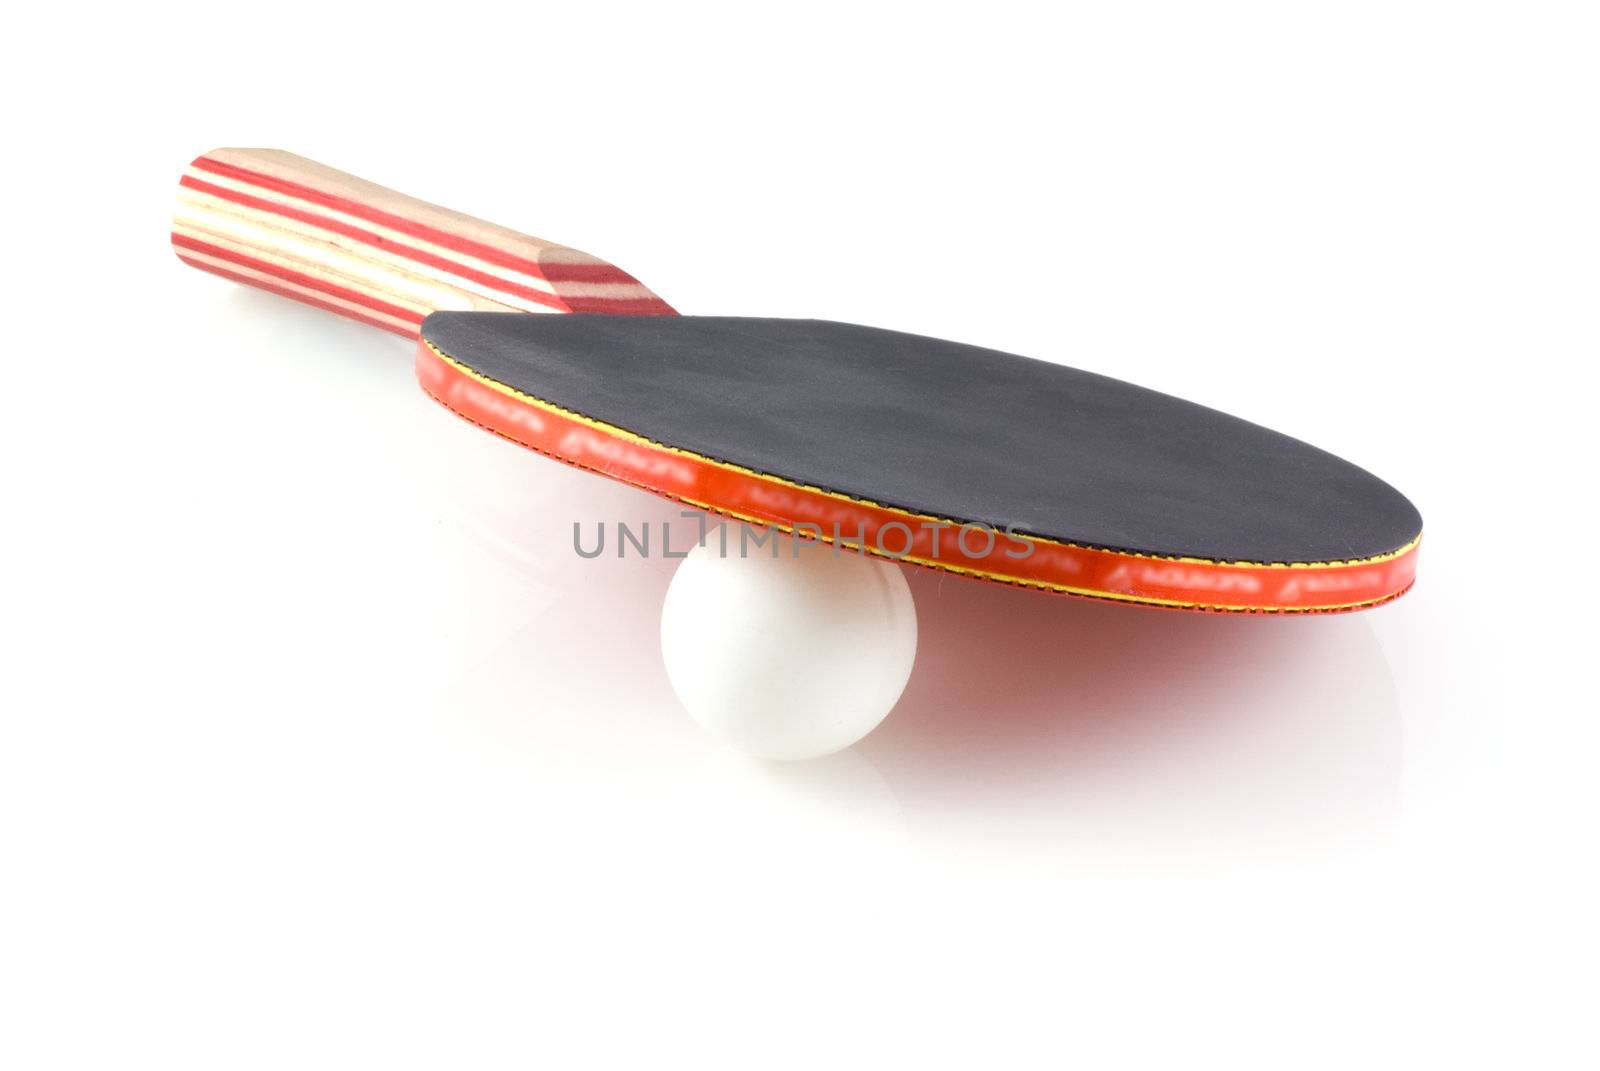 Table tennis bat. by SasPartout